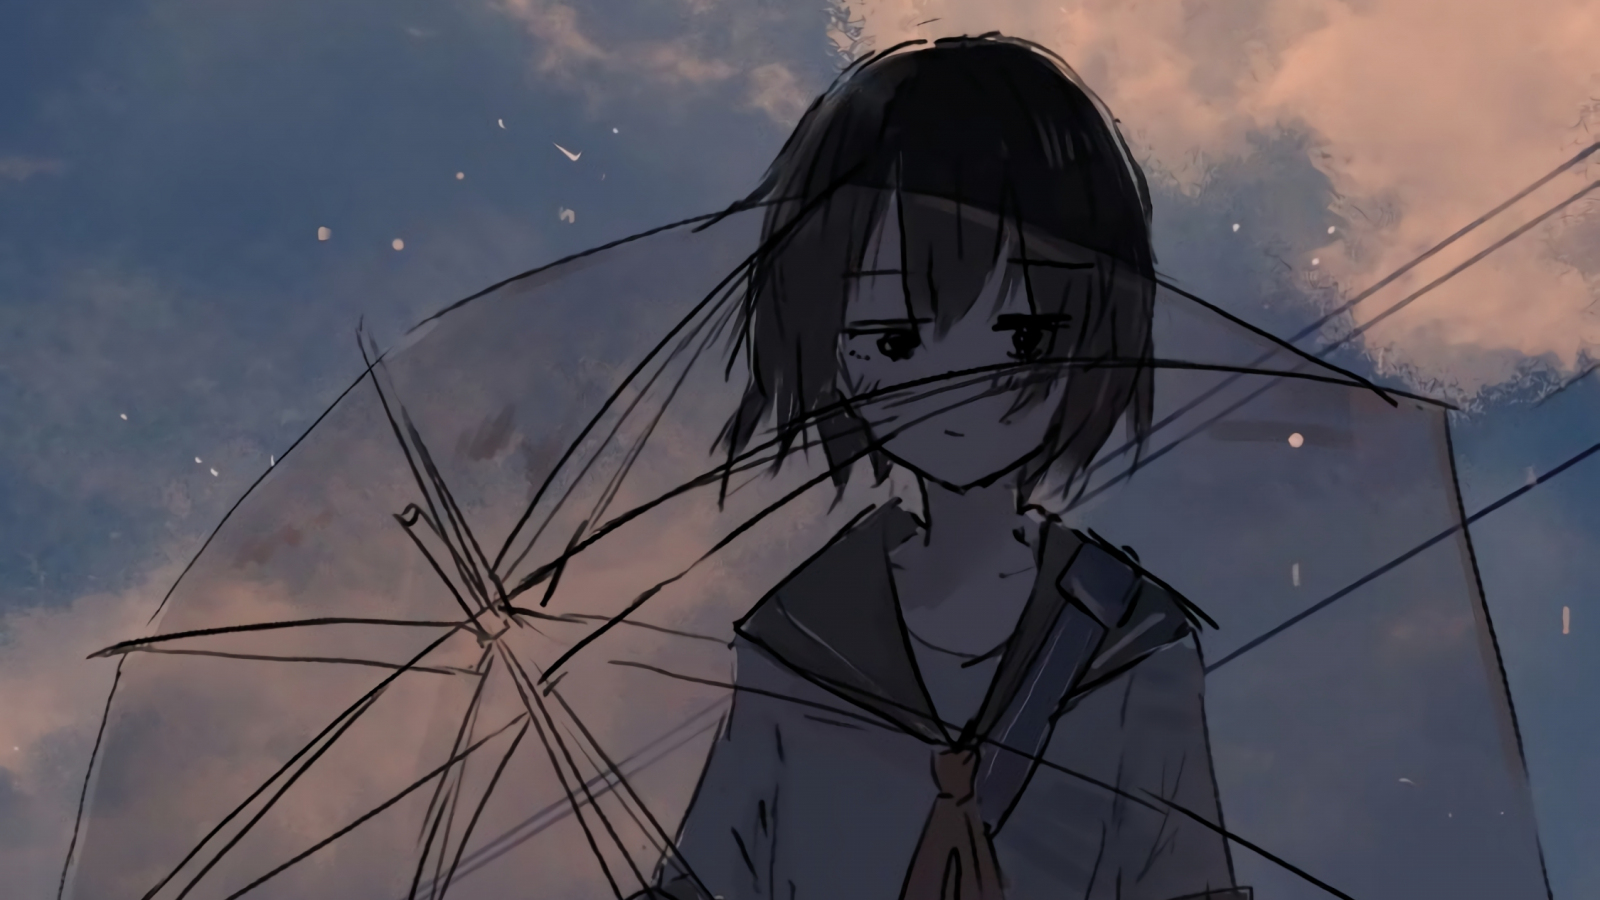 Anime girl and umbrella, art, 1600x900 wallpaper